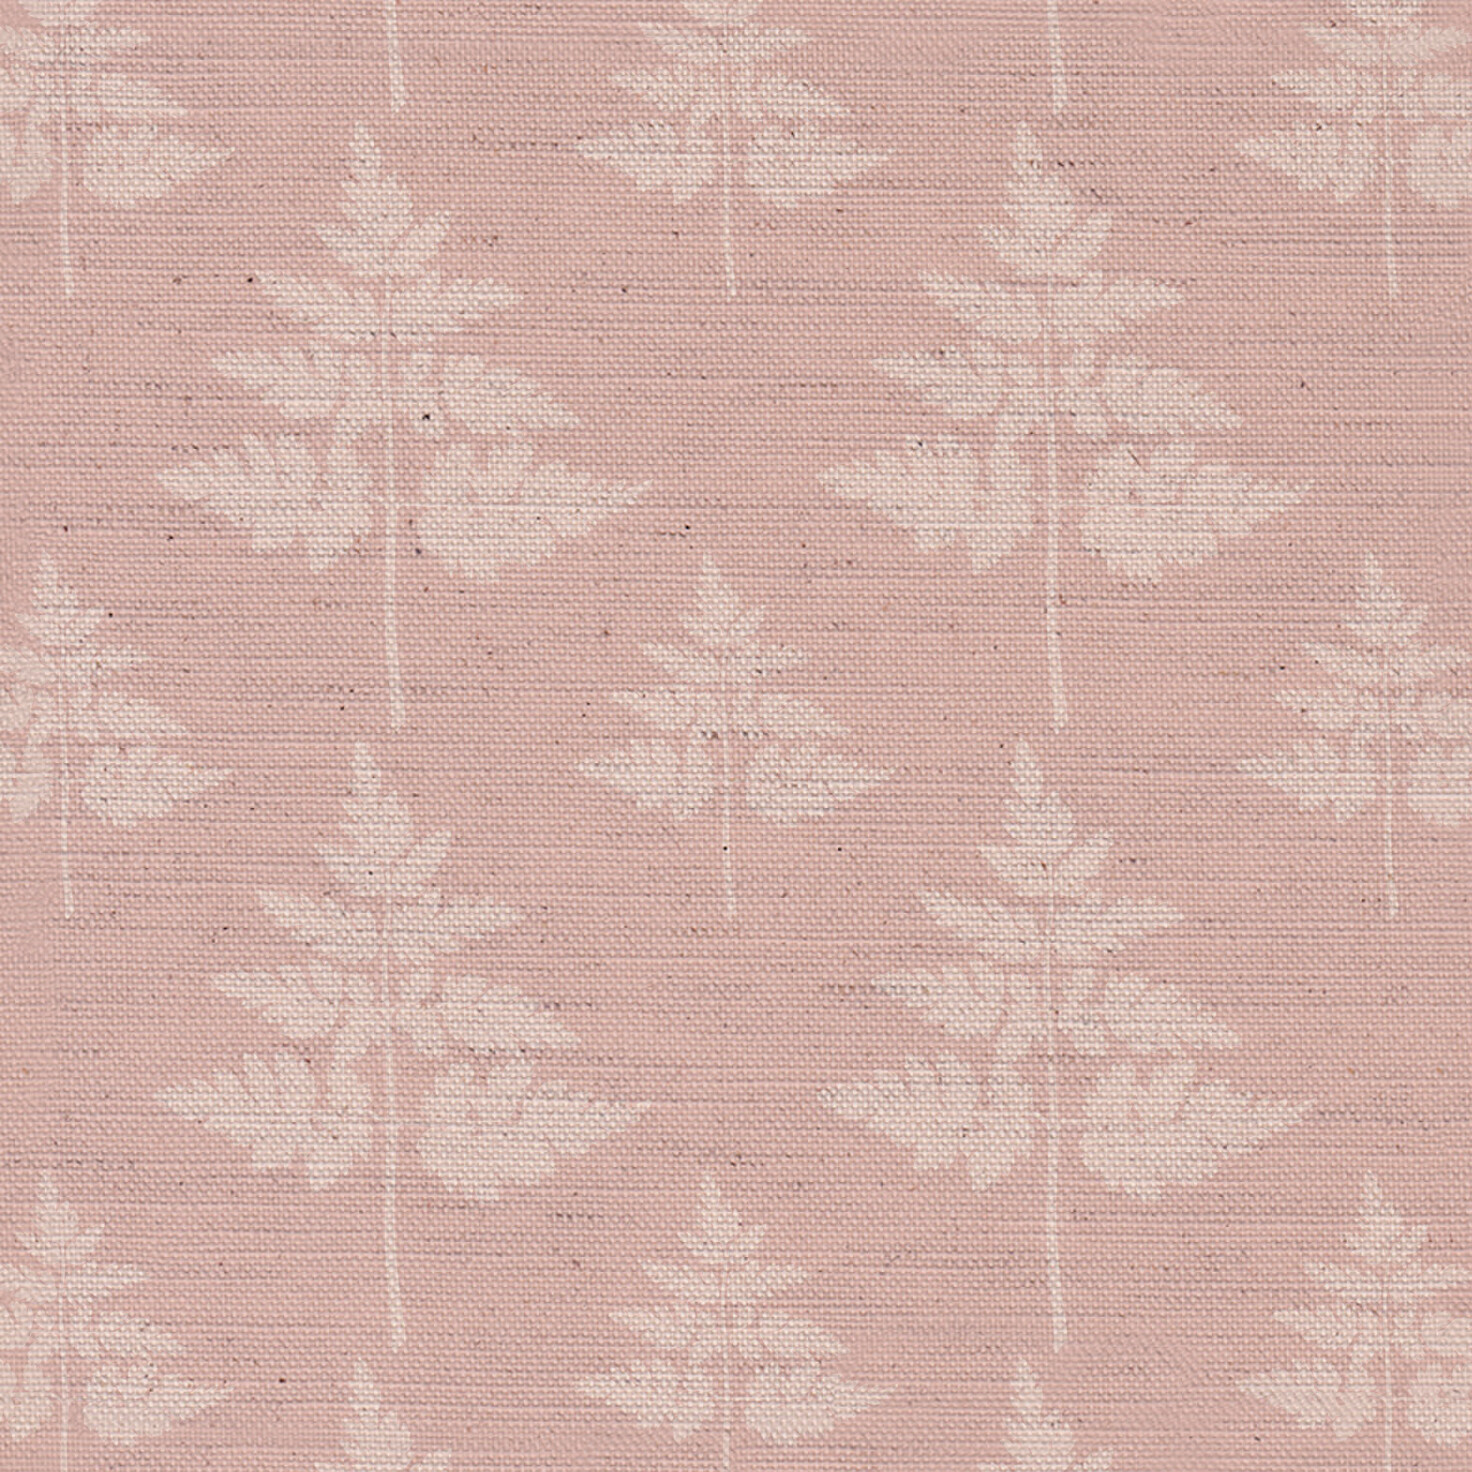 Country Lane Leaf Fabric